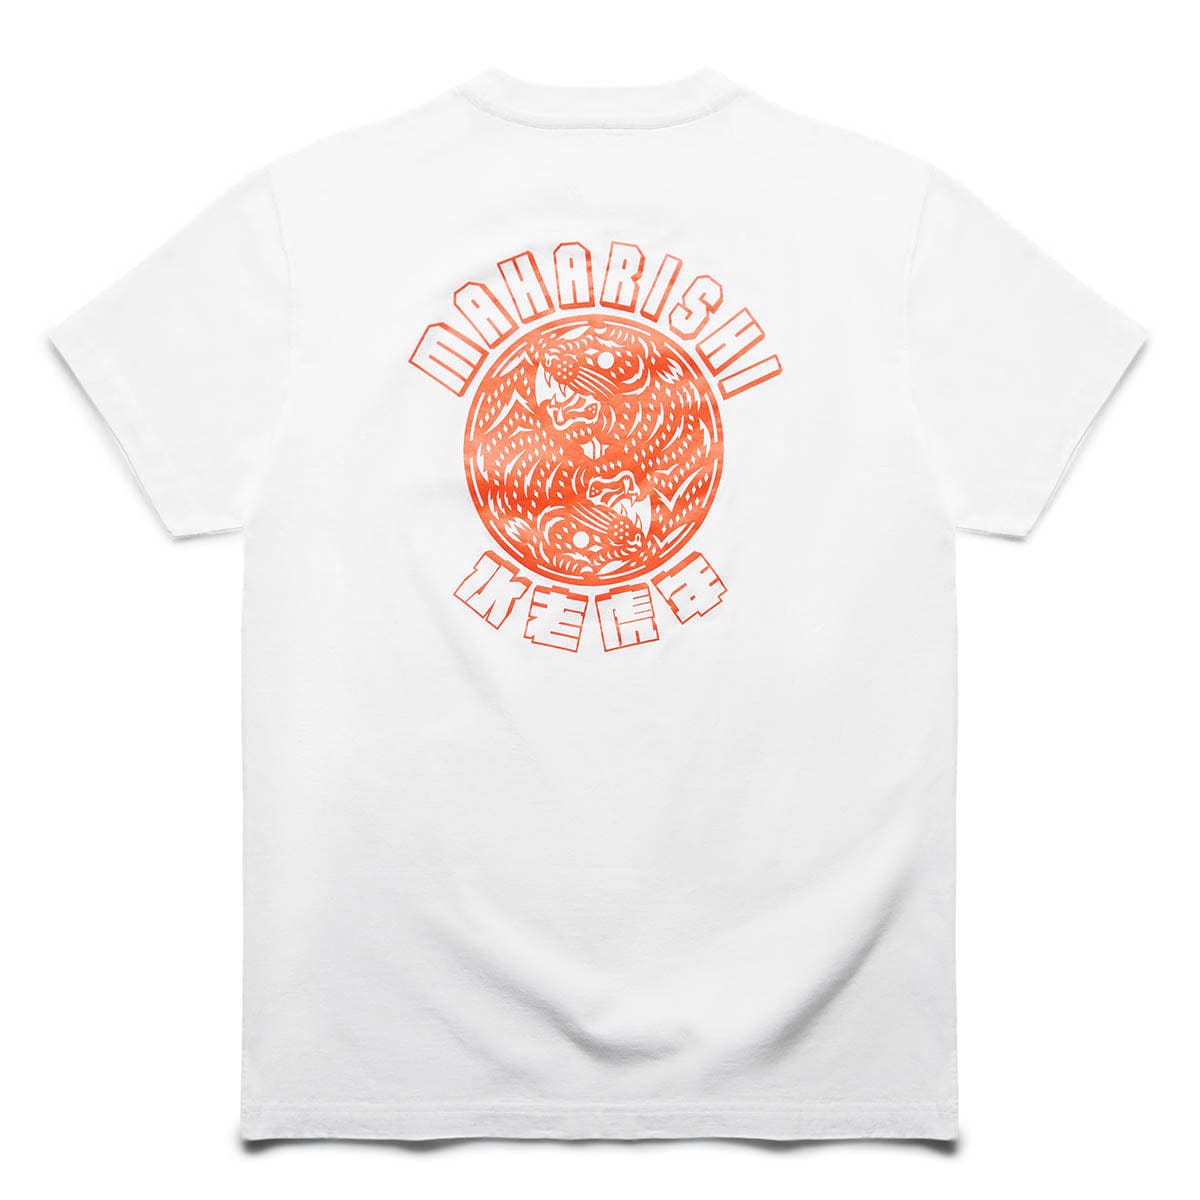 Maharishi T-Shirts PAPERCUT TIGER YINYANG T-SHIRT